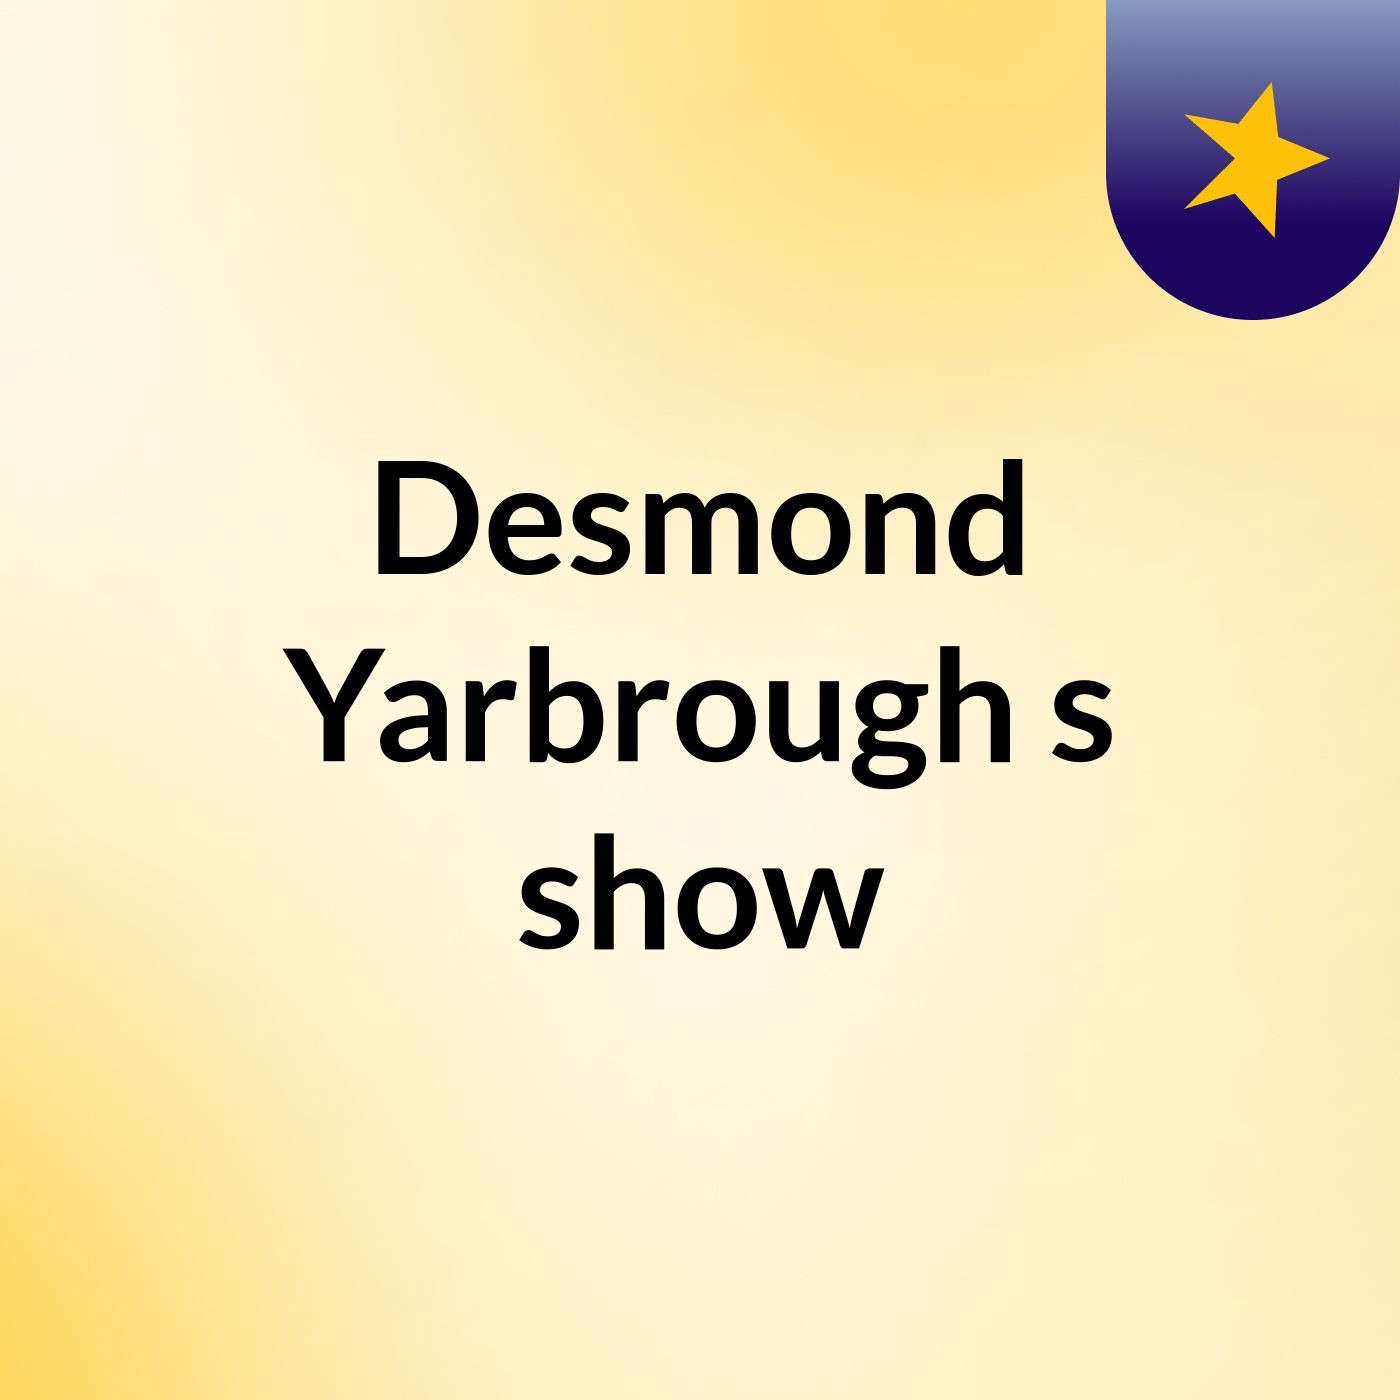 Desmond Yarbrough's show